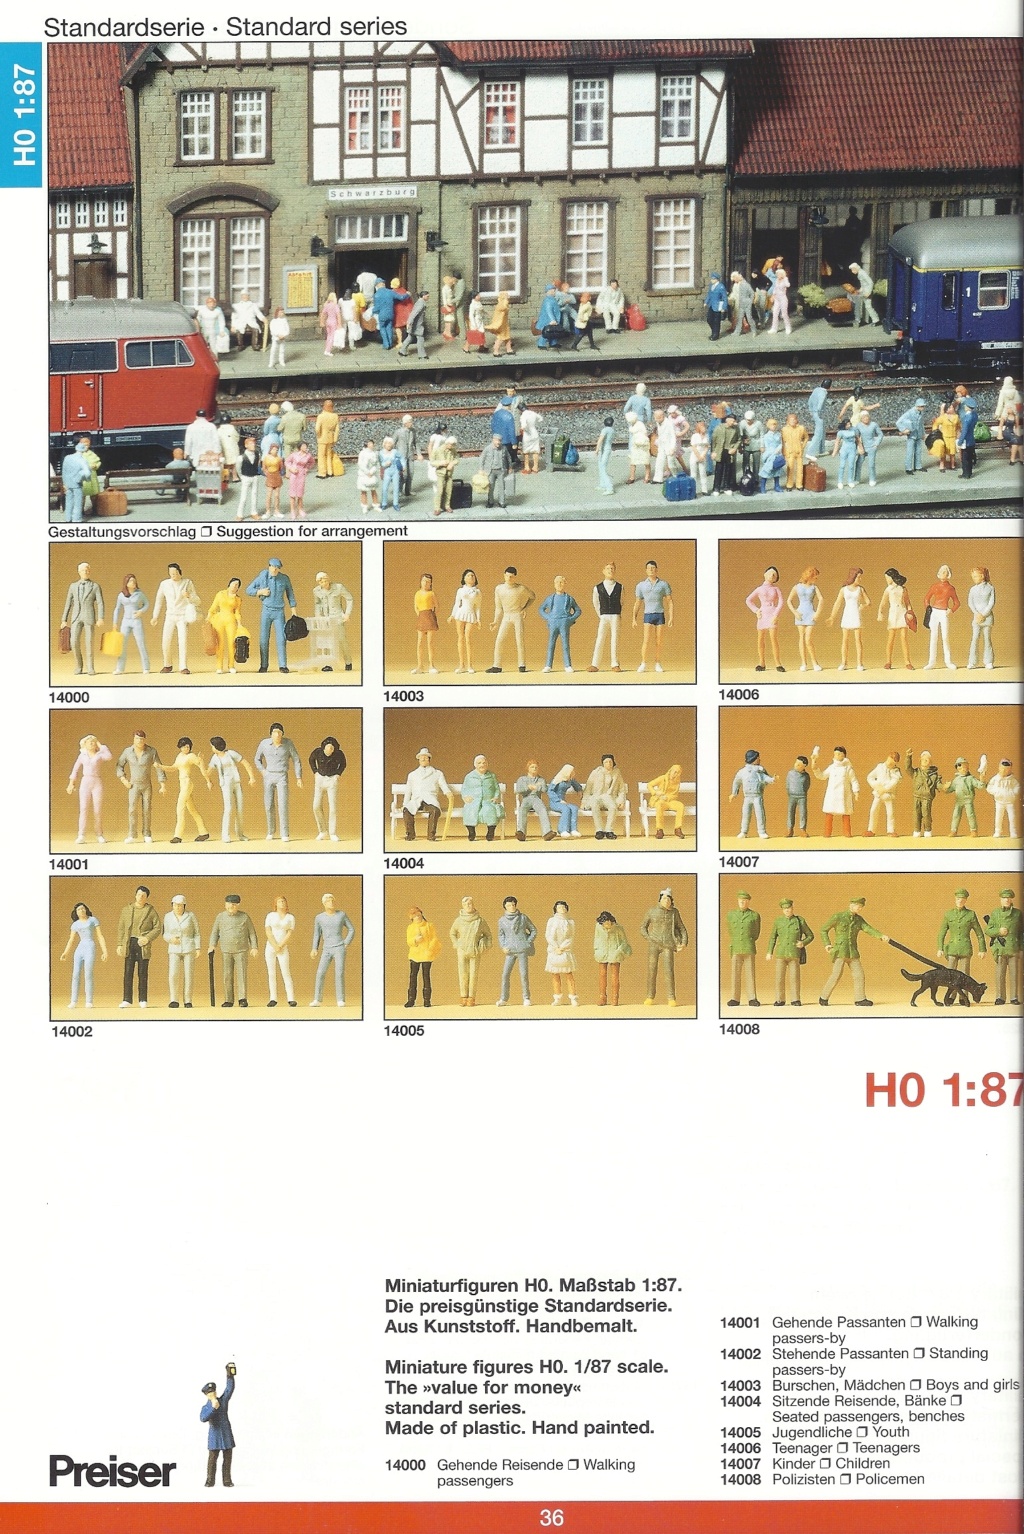 [PREISER 2007] Catalogue PK 24 2007 Preis674